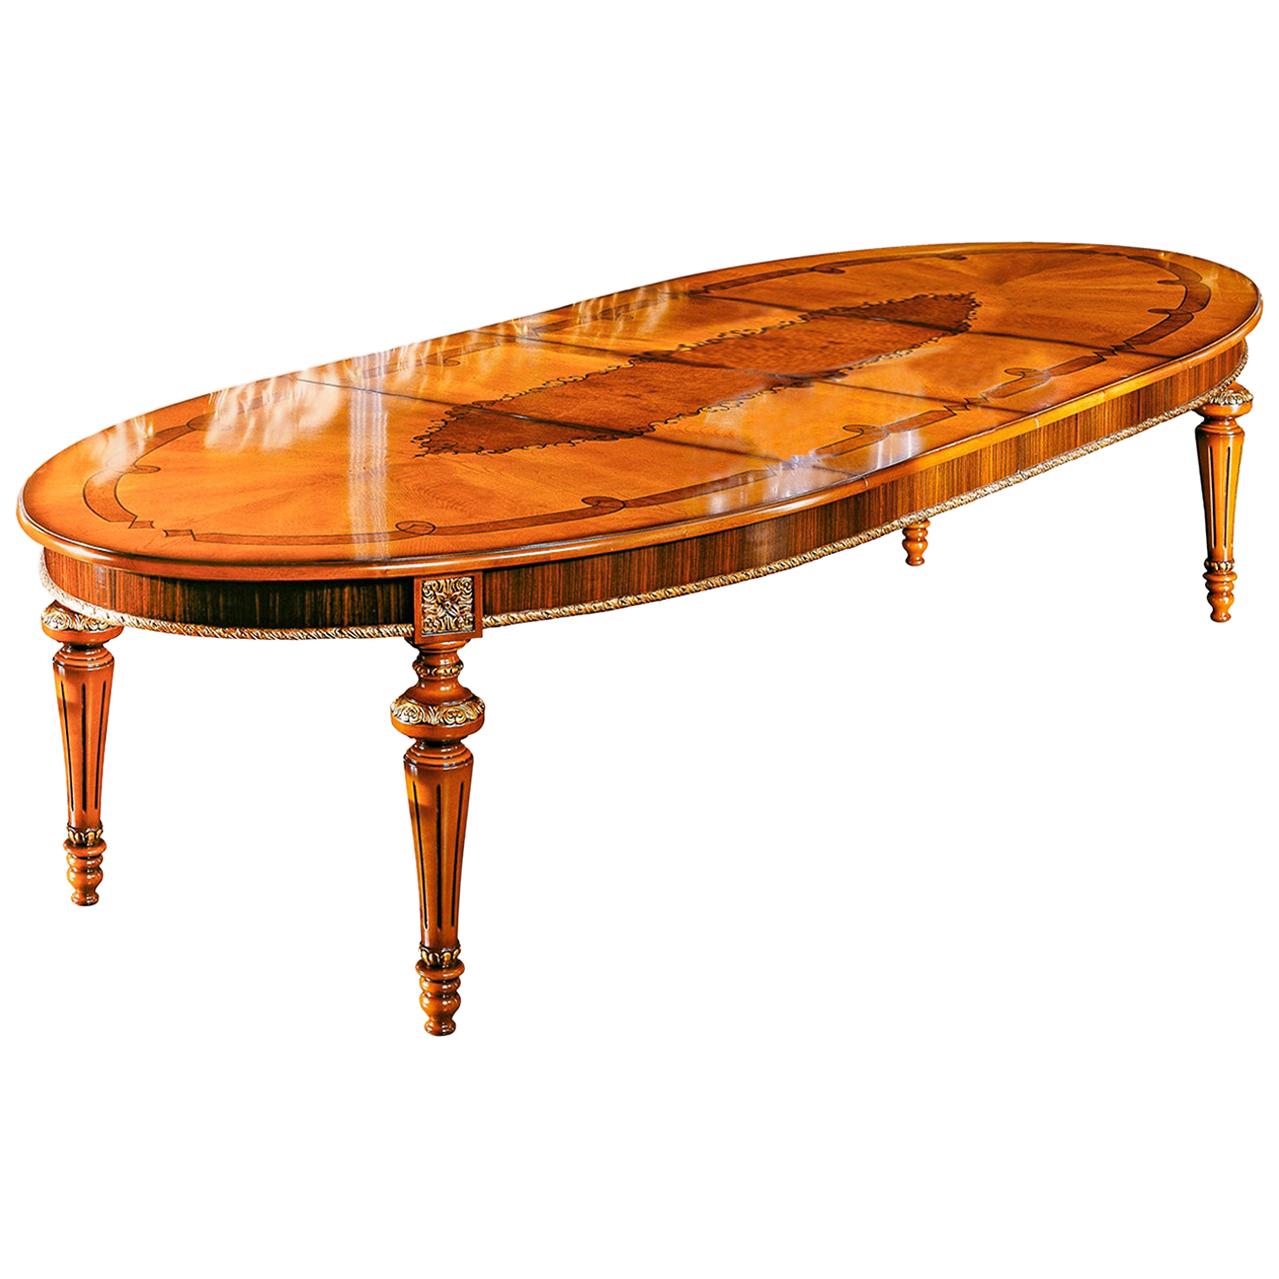 Extendible Oval Table